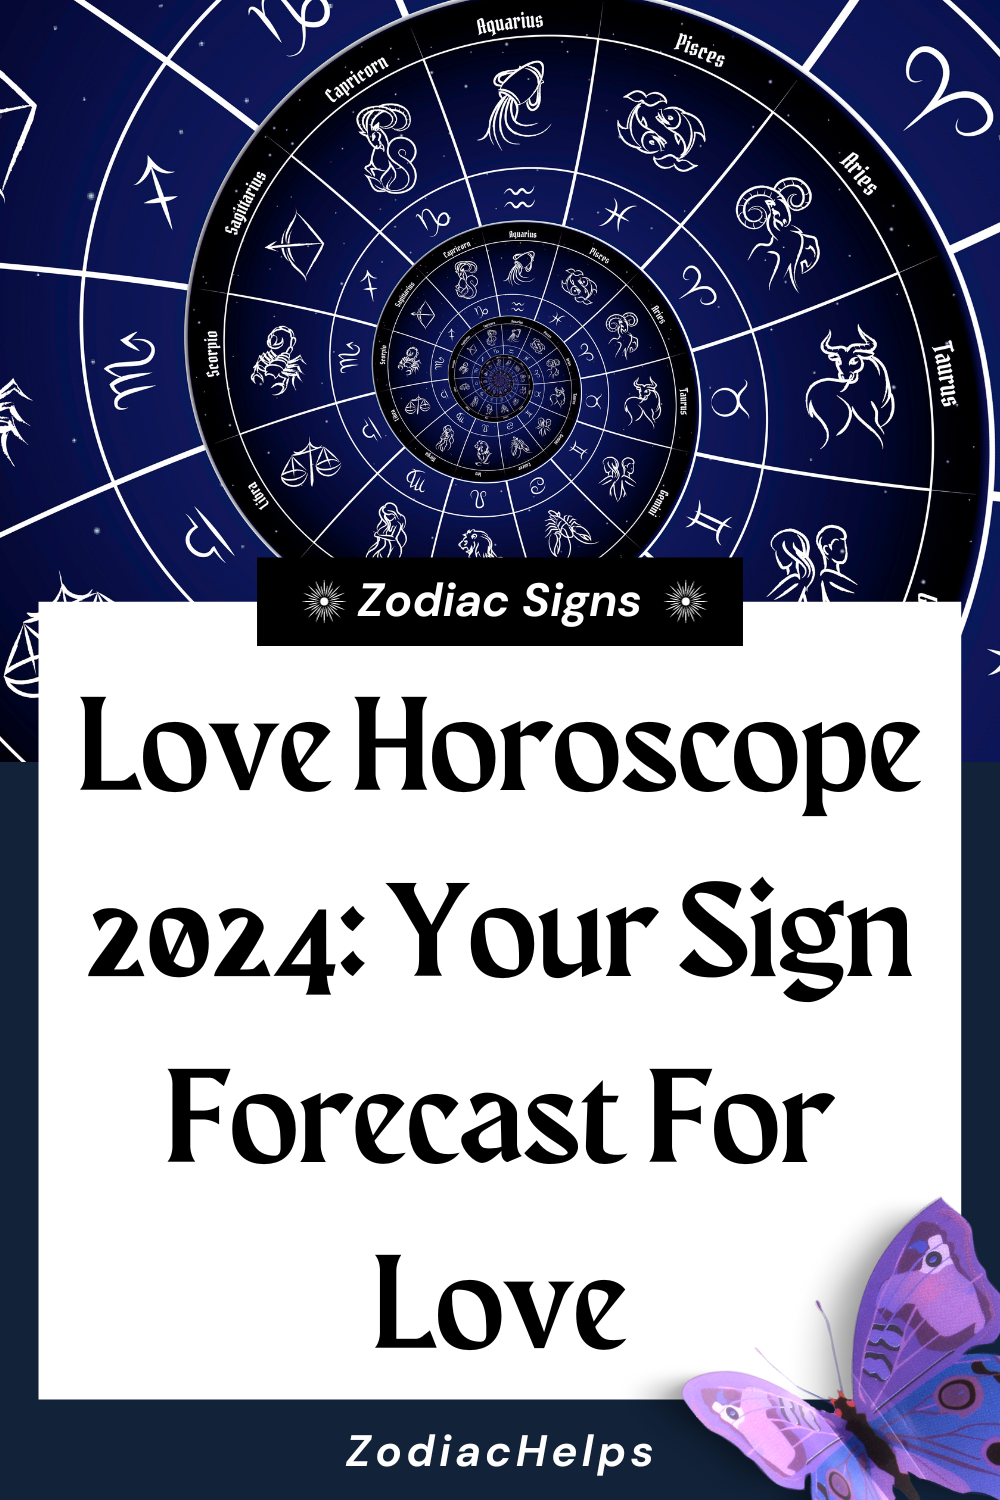 Love Horoscope 2024: Your Sign Forecast For Love